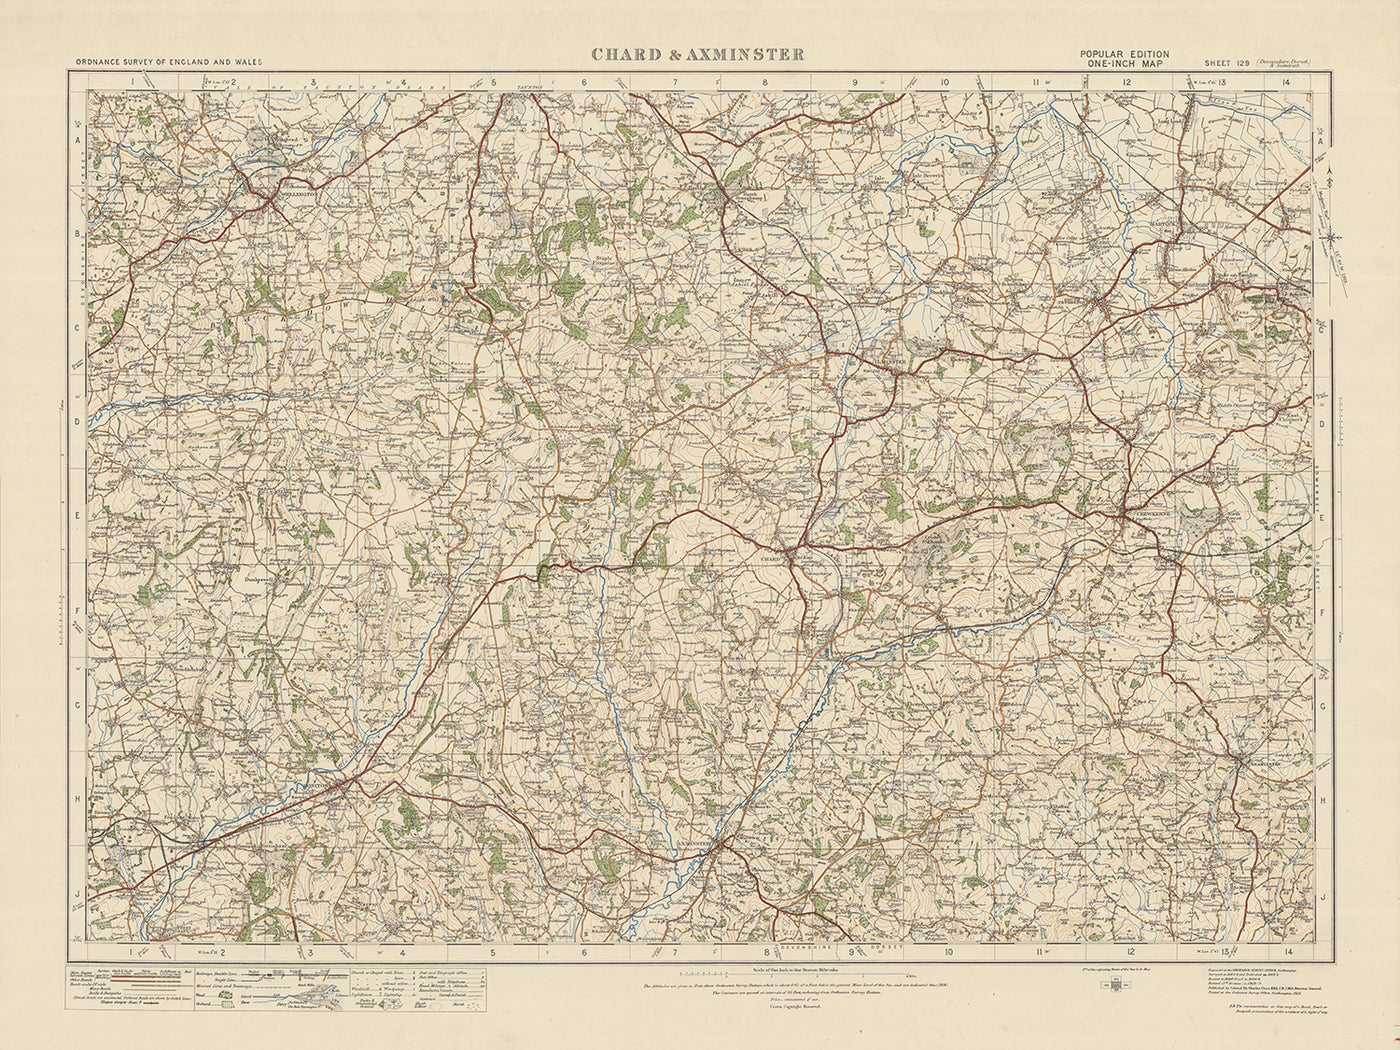 Old Ordnance Survey Map, Sheet 129 - Chard & Axminster, 1925: Honiton, Crewkerne, Ilminster, Wellington, Blackdown Hills AONB